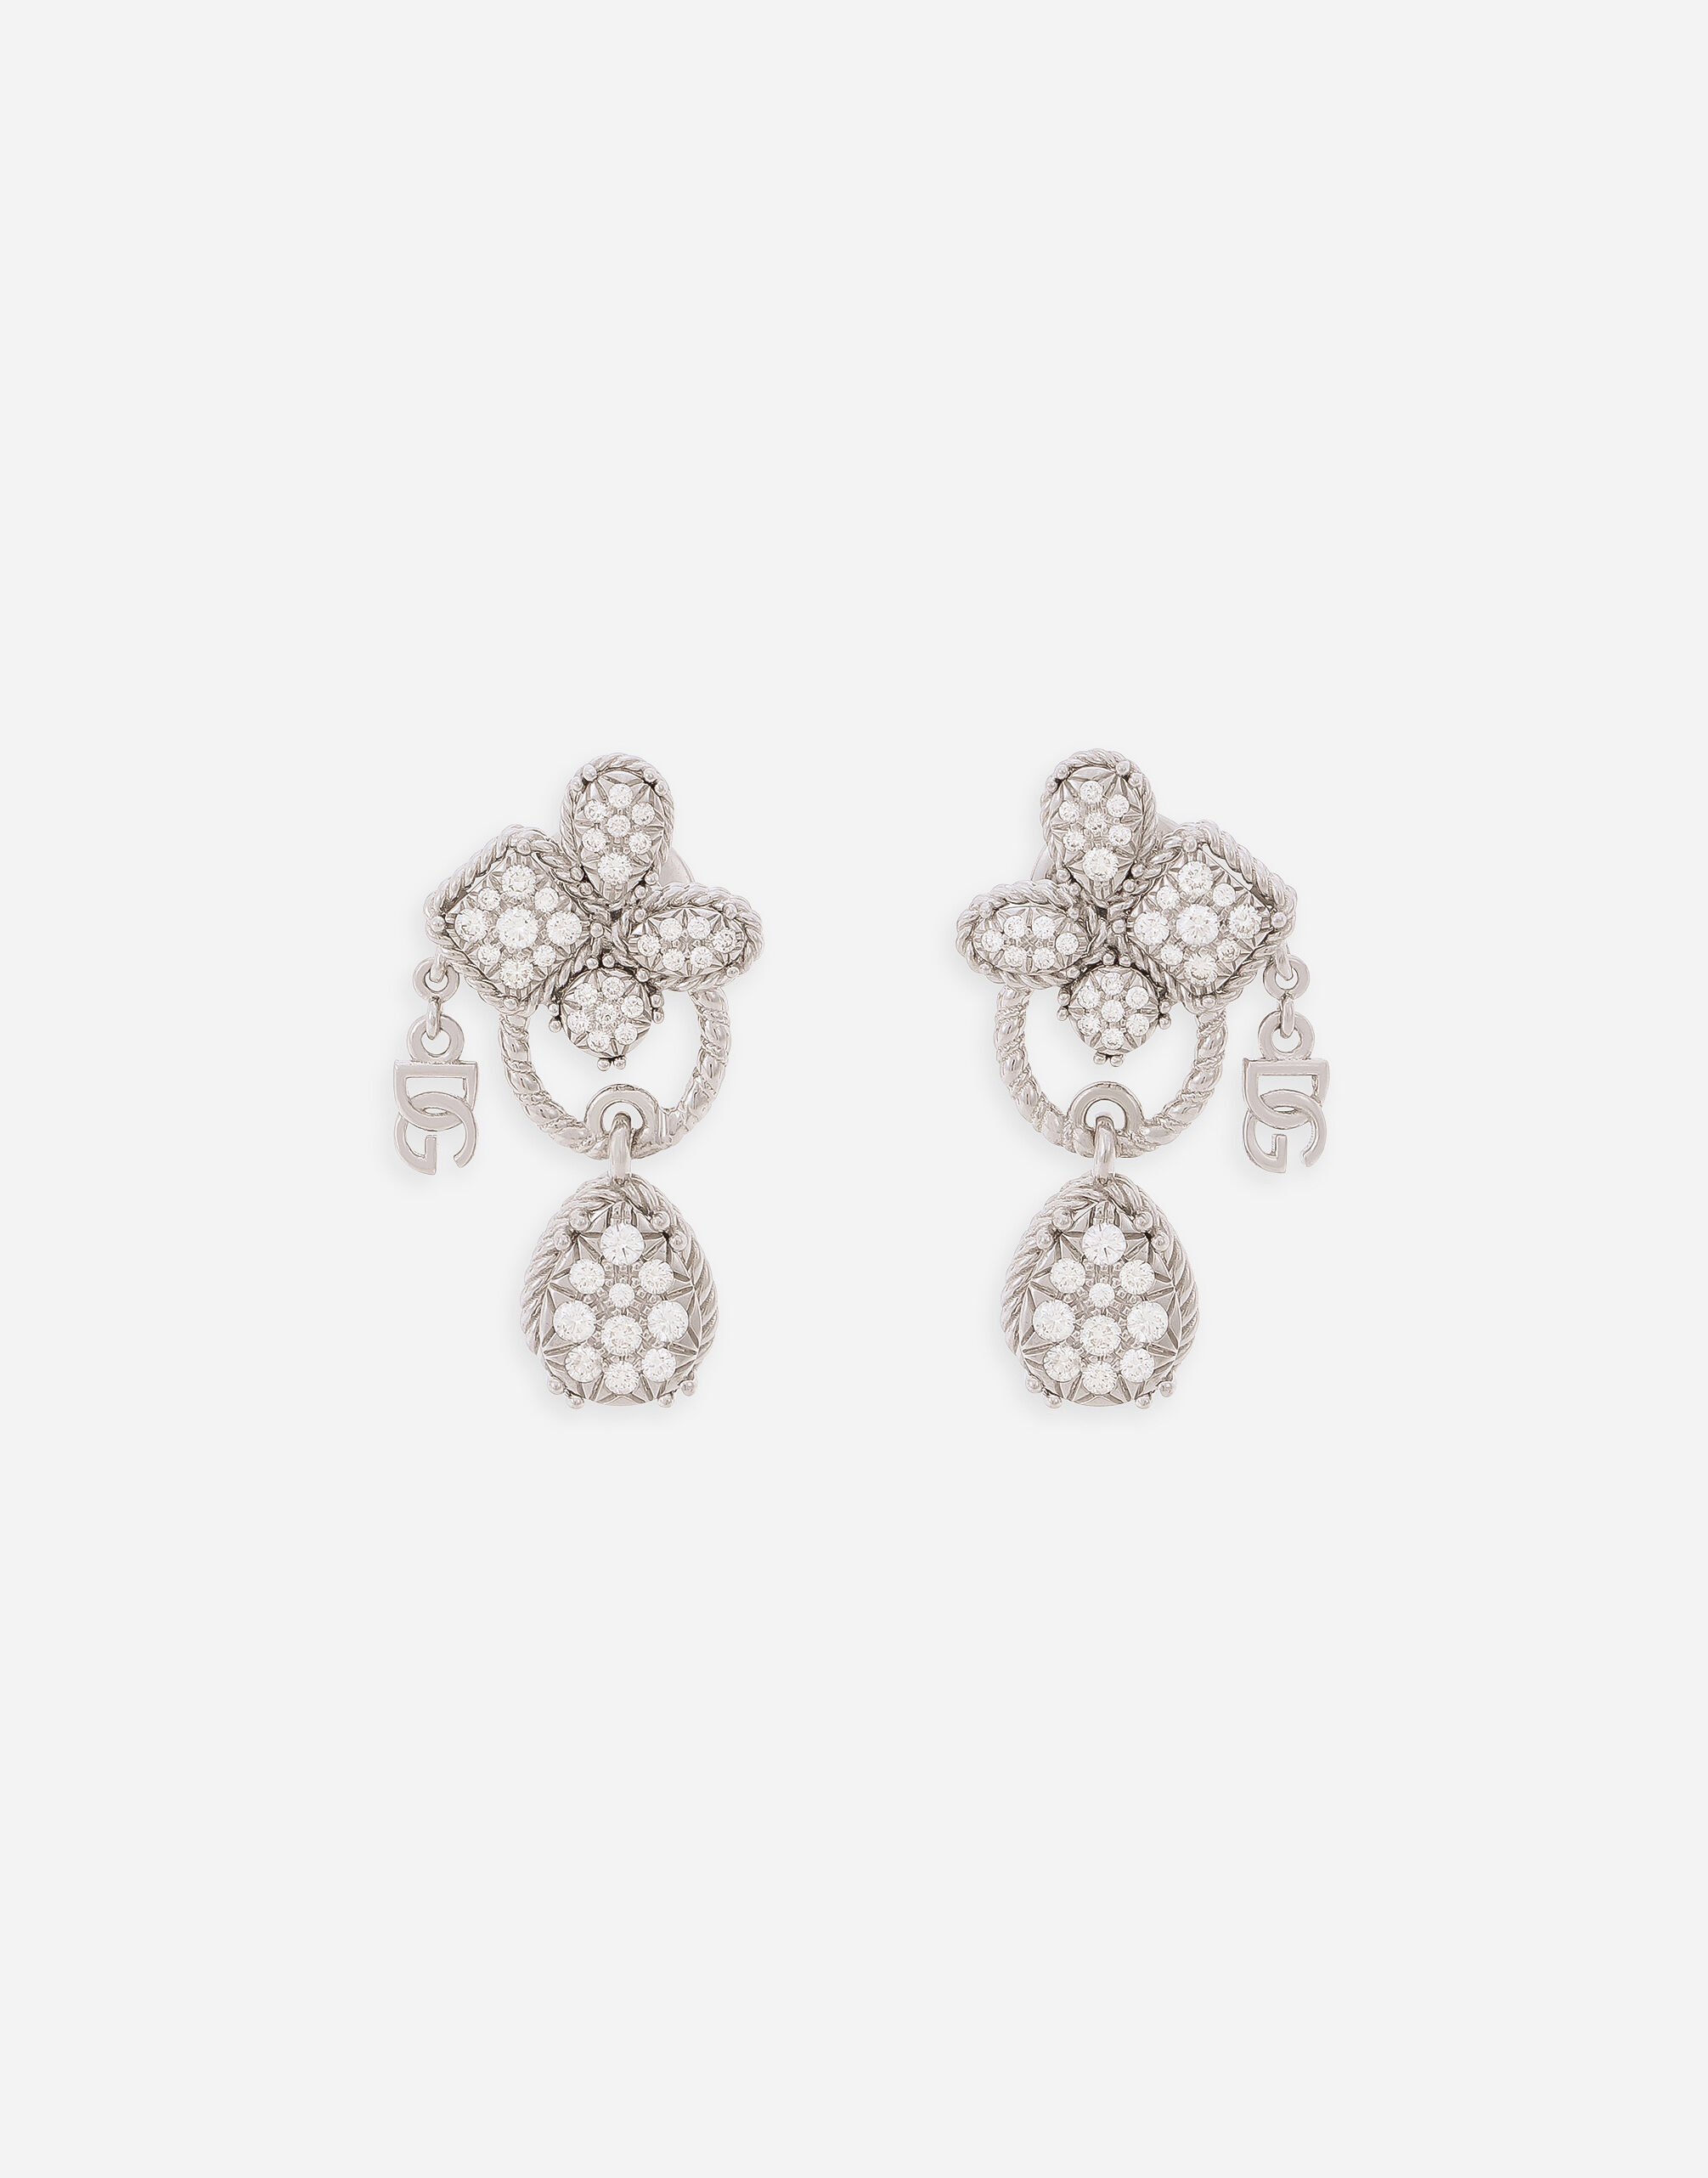 Dolce & Gabbana Easy Diamond earrings in white gold 18kt and diamonds pavé Yellow Gold WRLD1GWDWYE